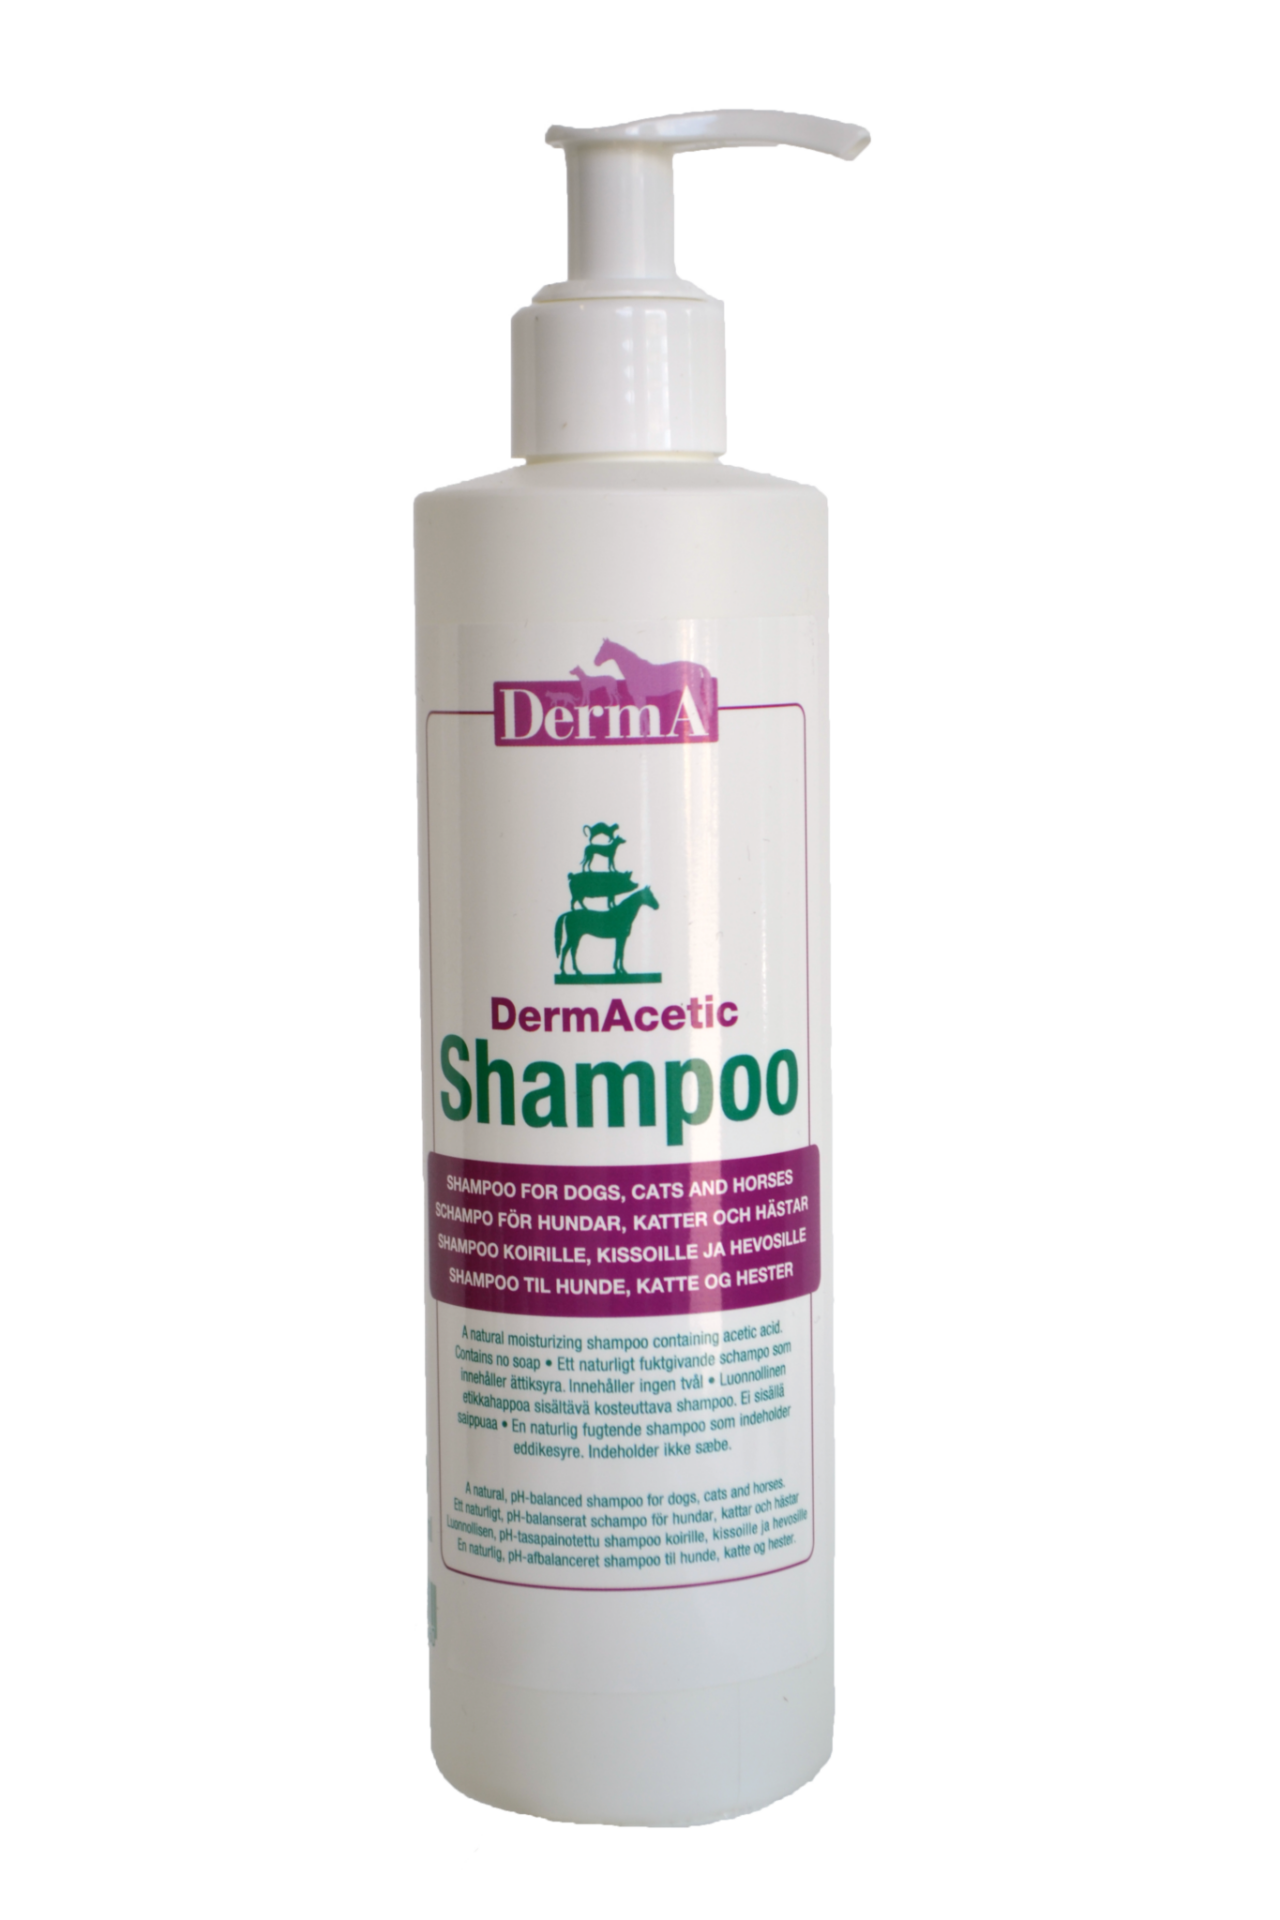 DermAcetic Shampoo